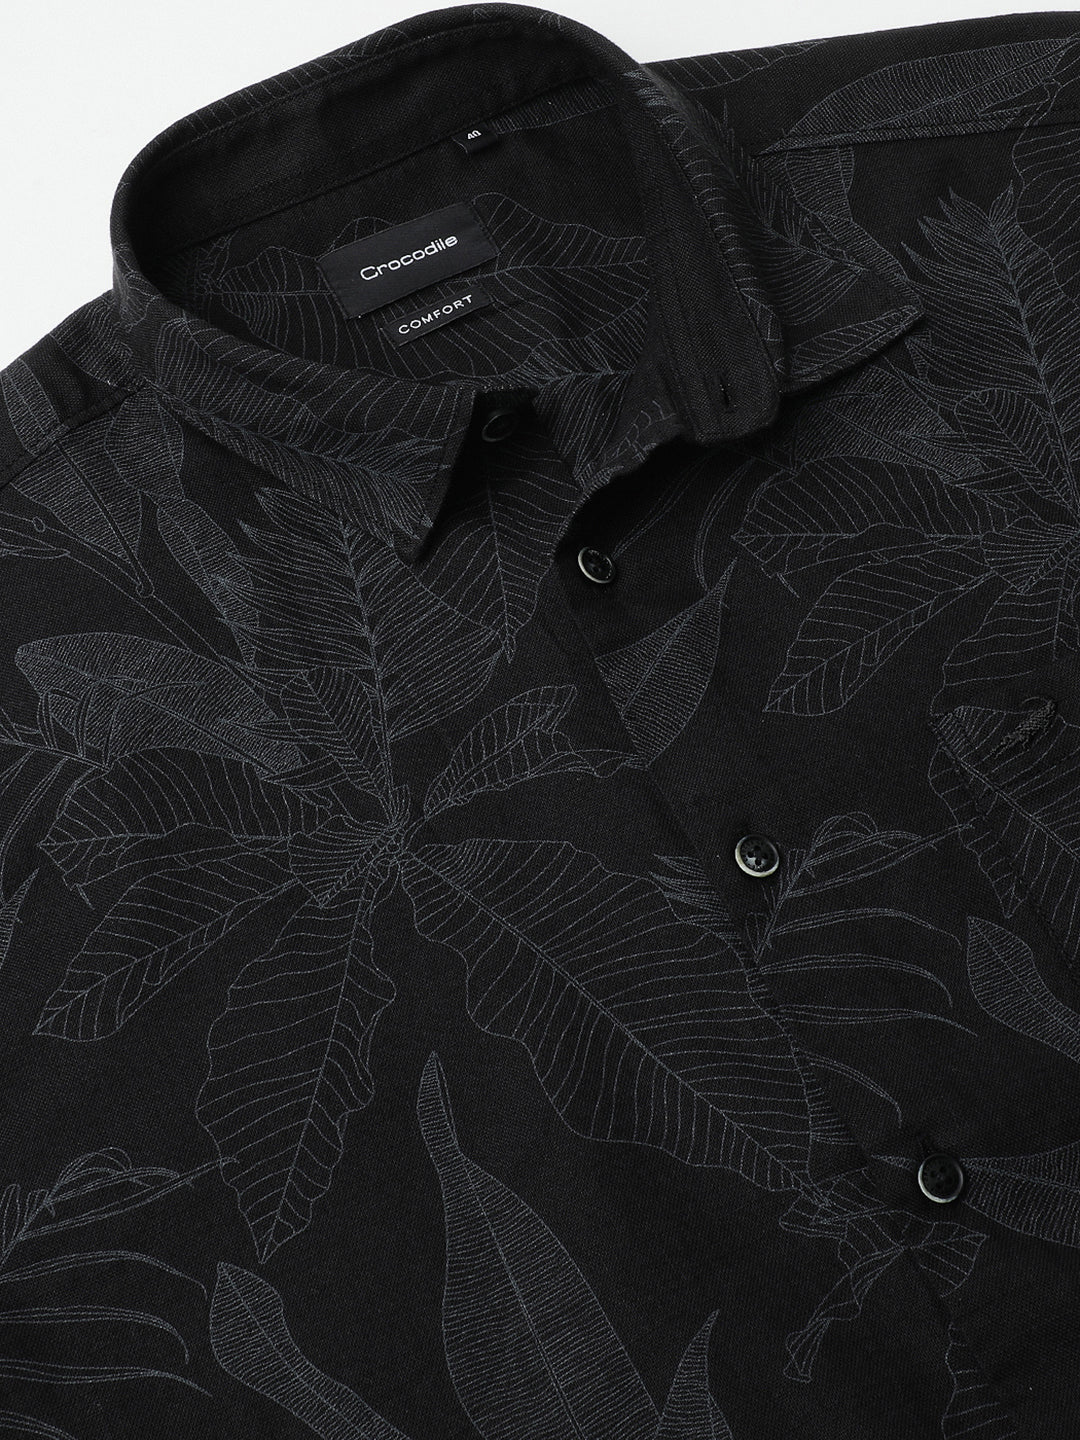 Black Printed Half Sleeve 100% Cotton Shirt